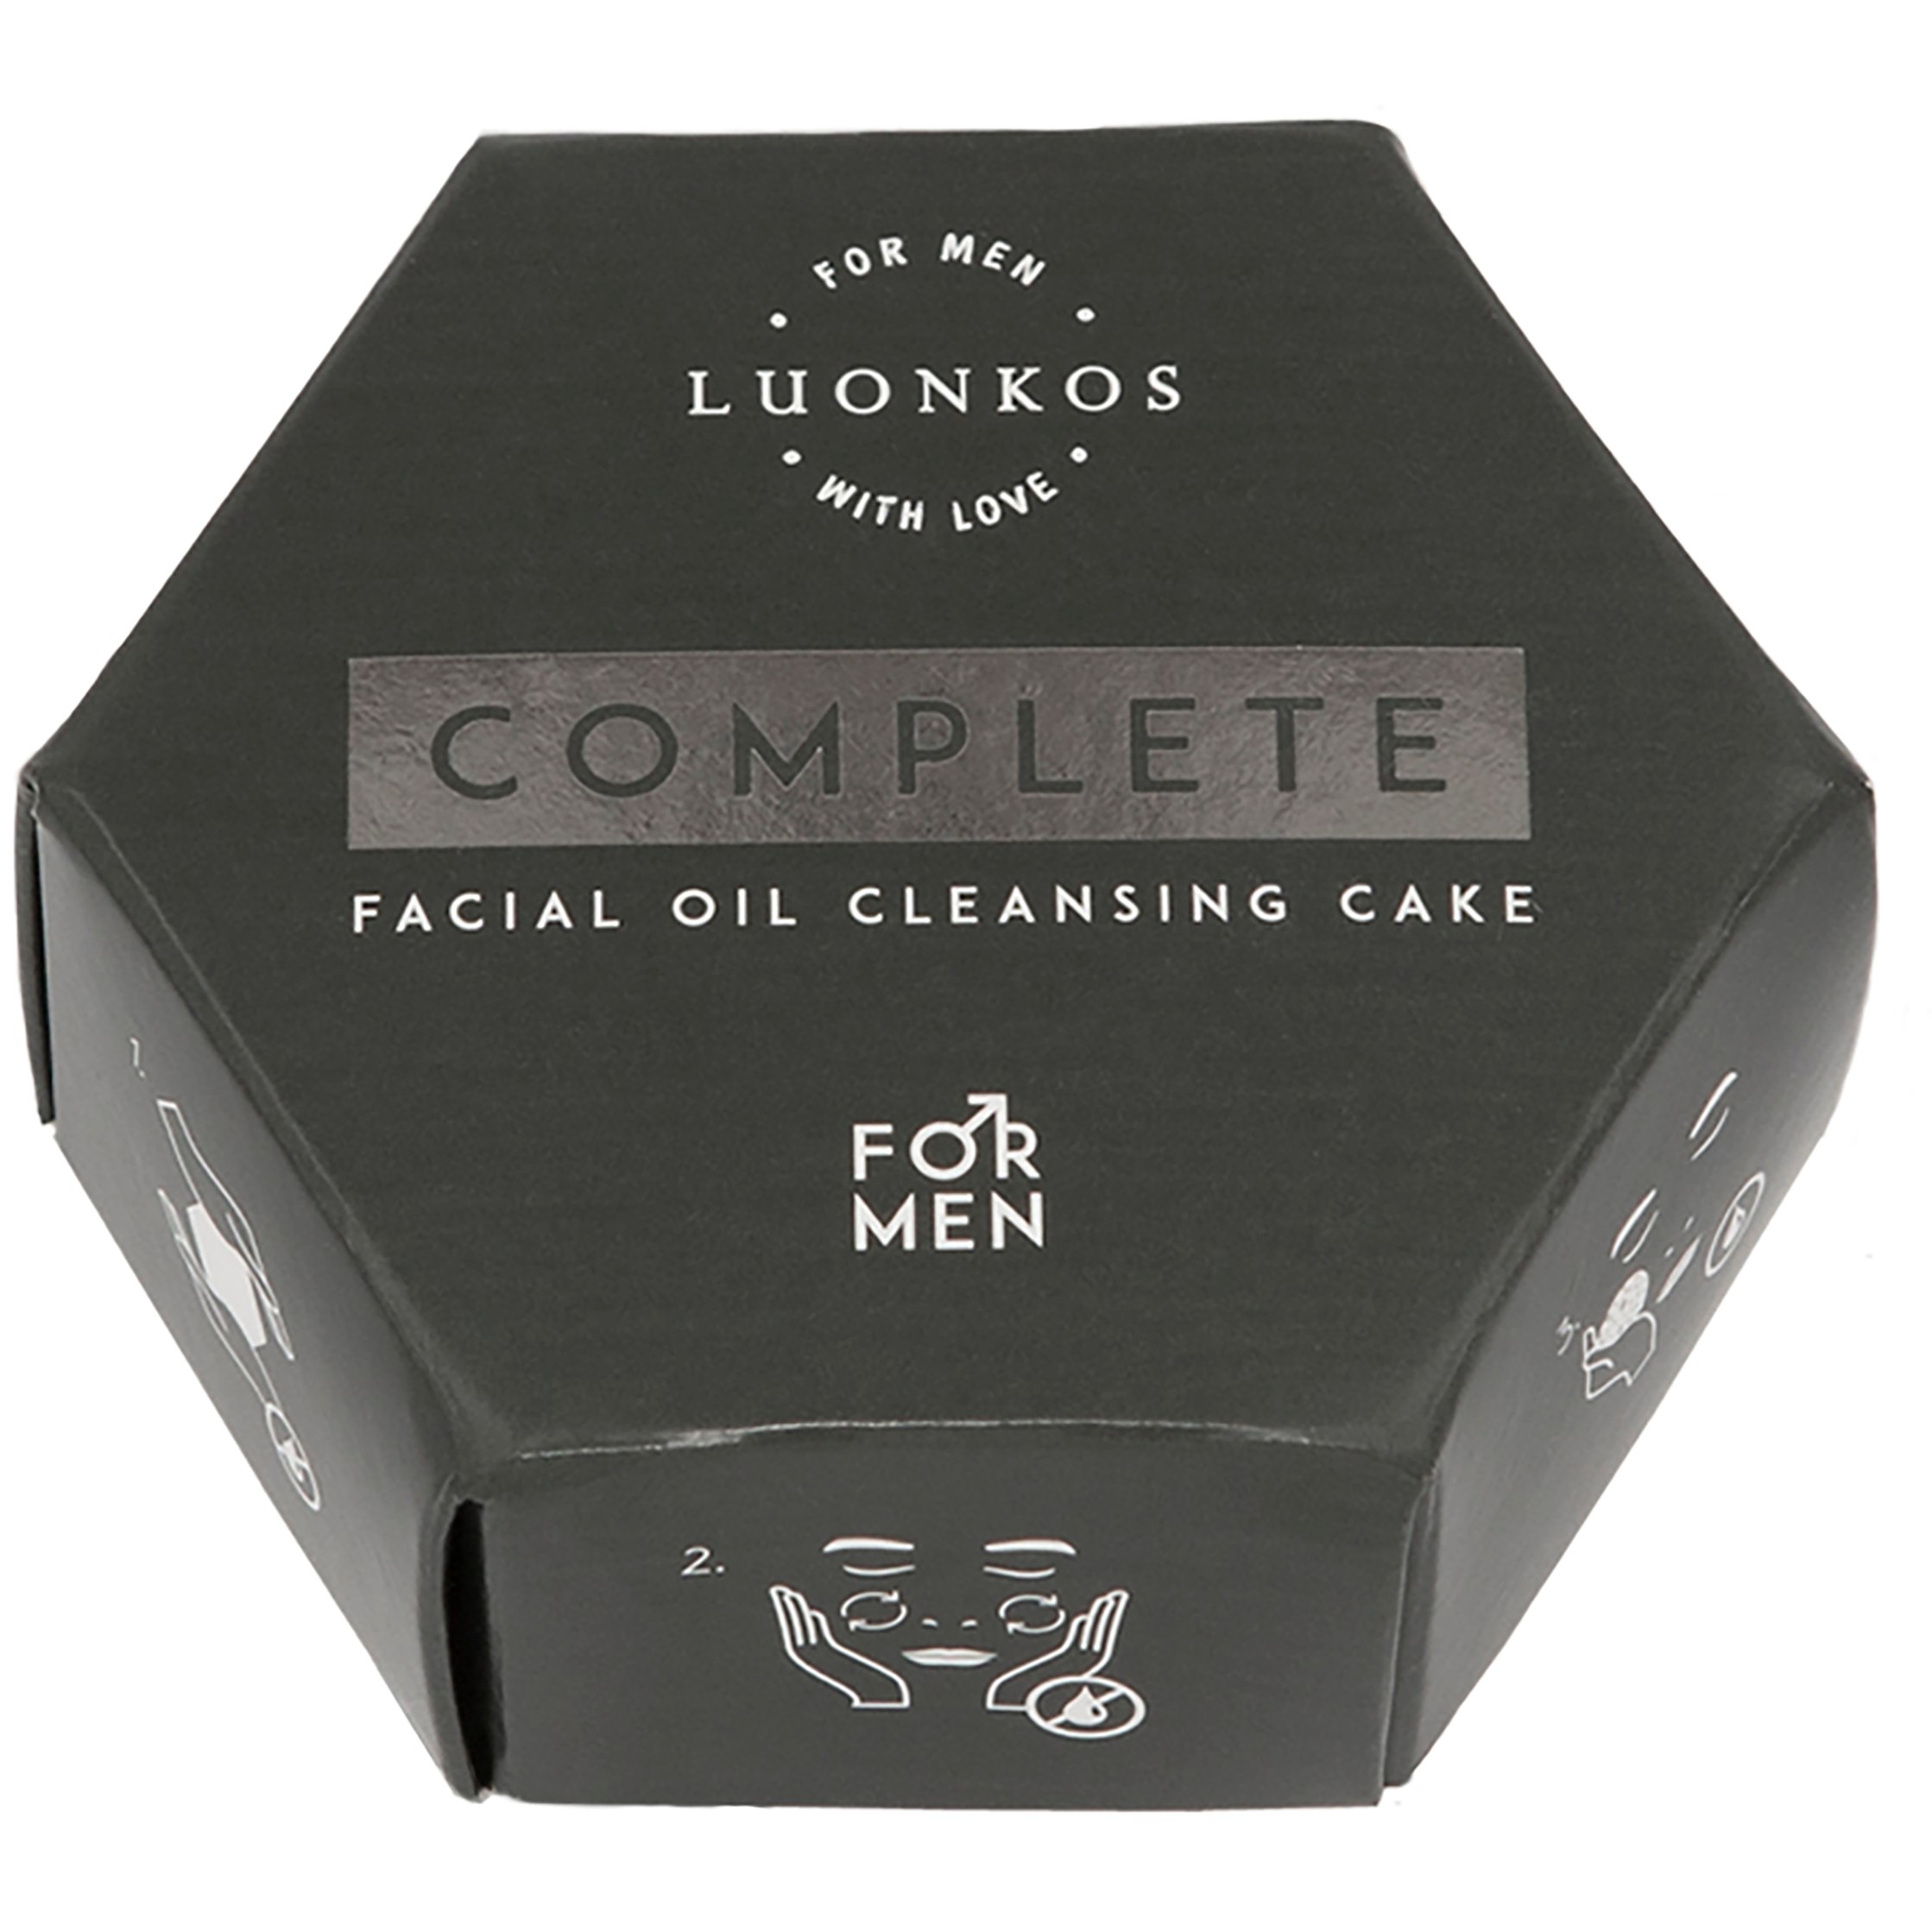 Luonkos Complete Facial Oil Cleansing Cake For Men 60 g